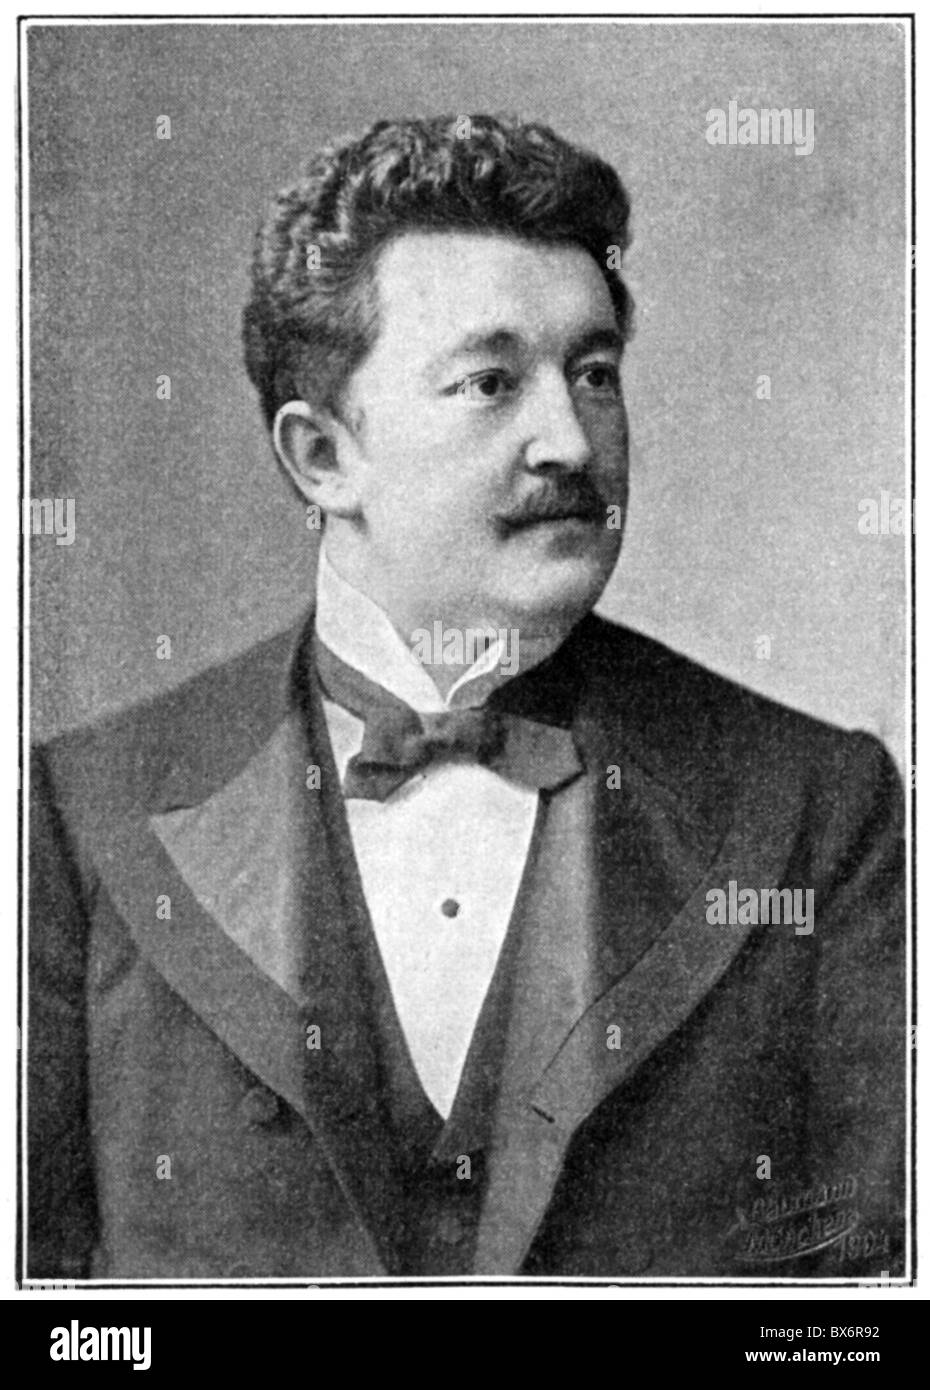 Knote, Heinrich, 26.11.1870 - 12.1.1953, German opera singer (dramatic tenor), portrait, circa 1904, Stock Photo